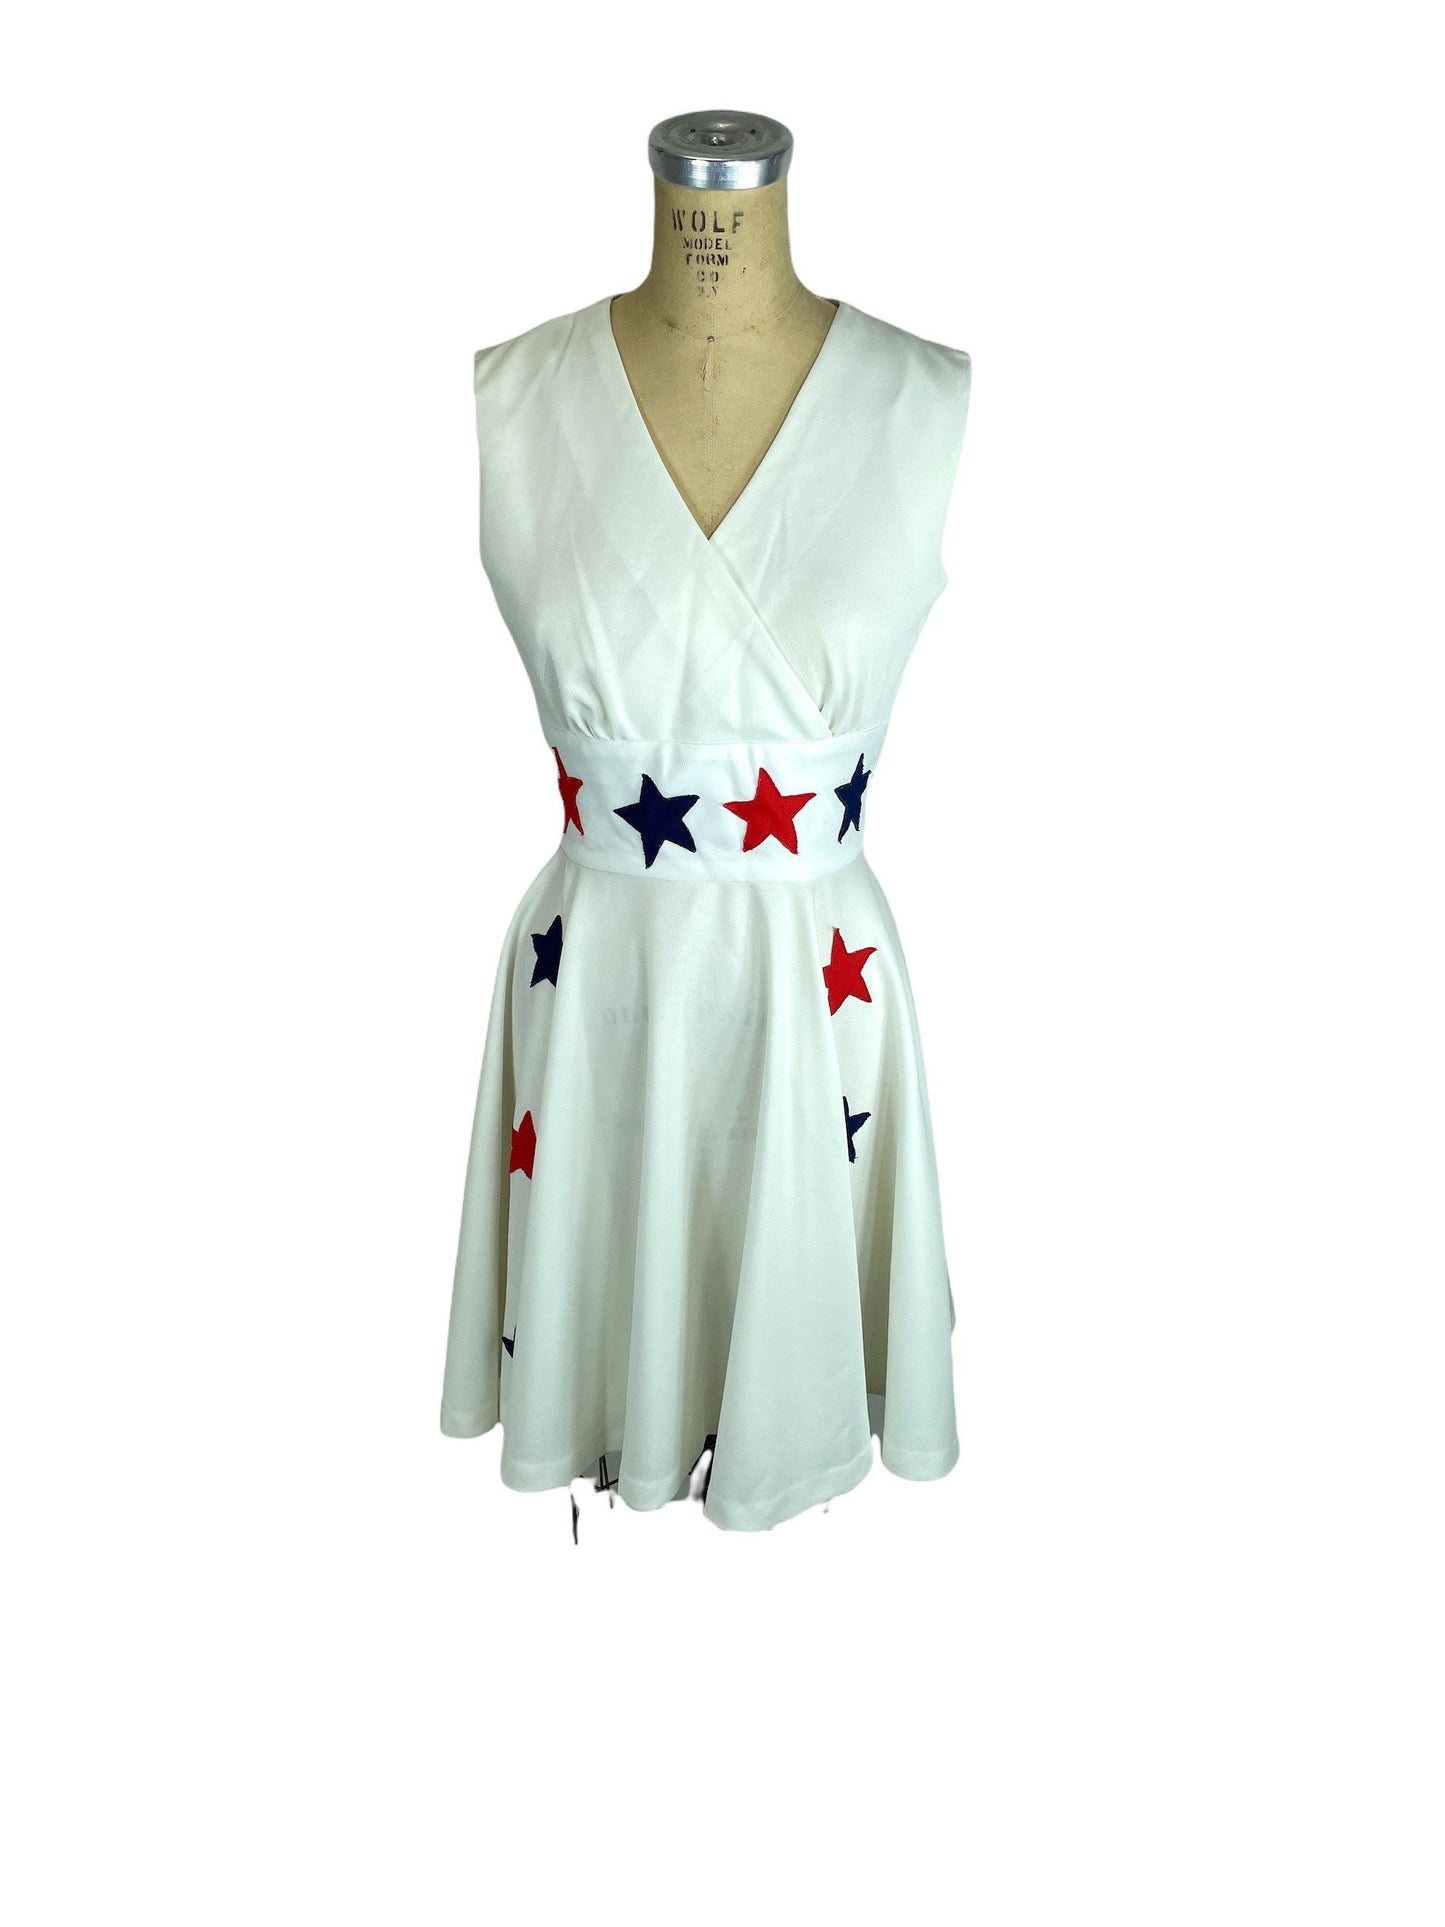 1970s stars dress with swirly skirt Size S